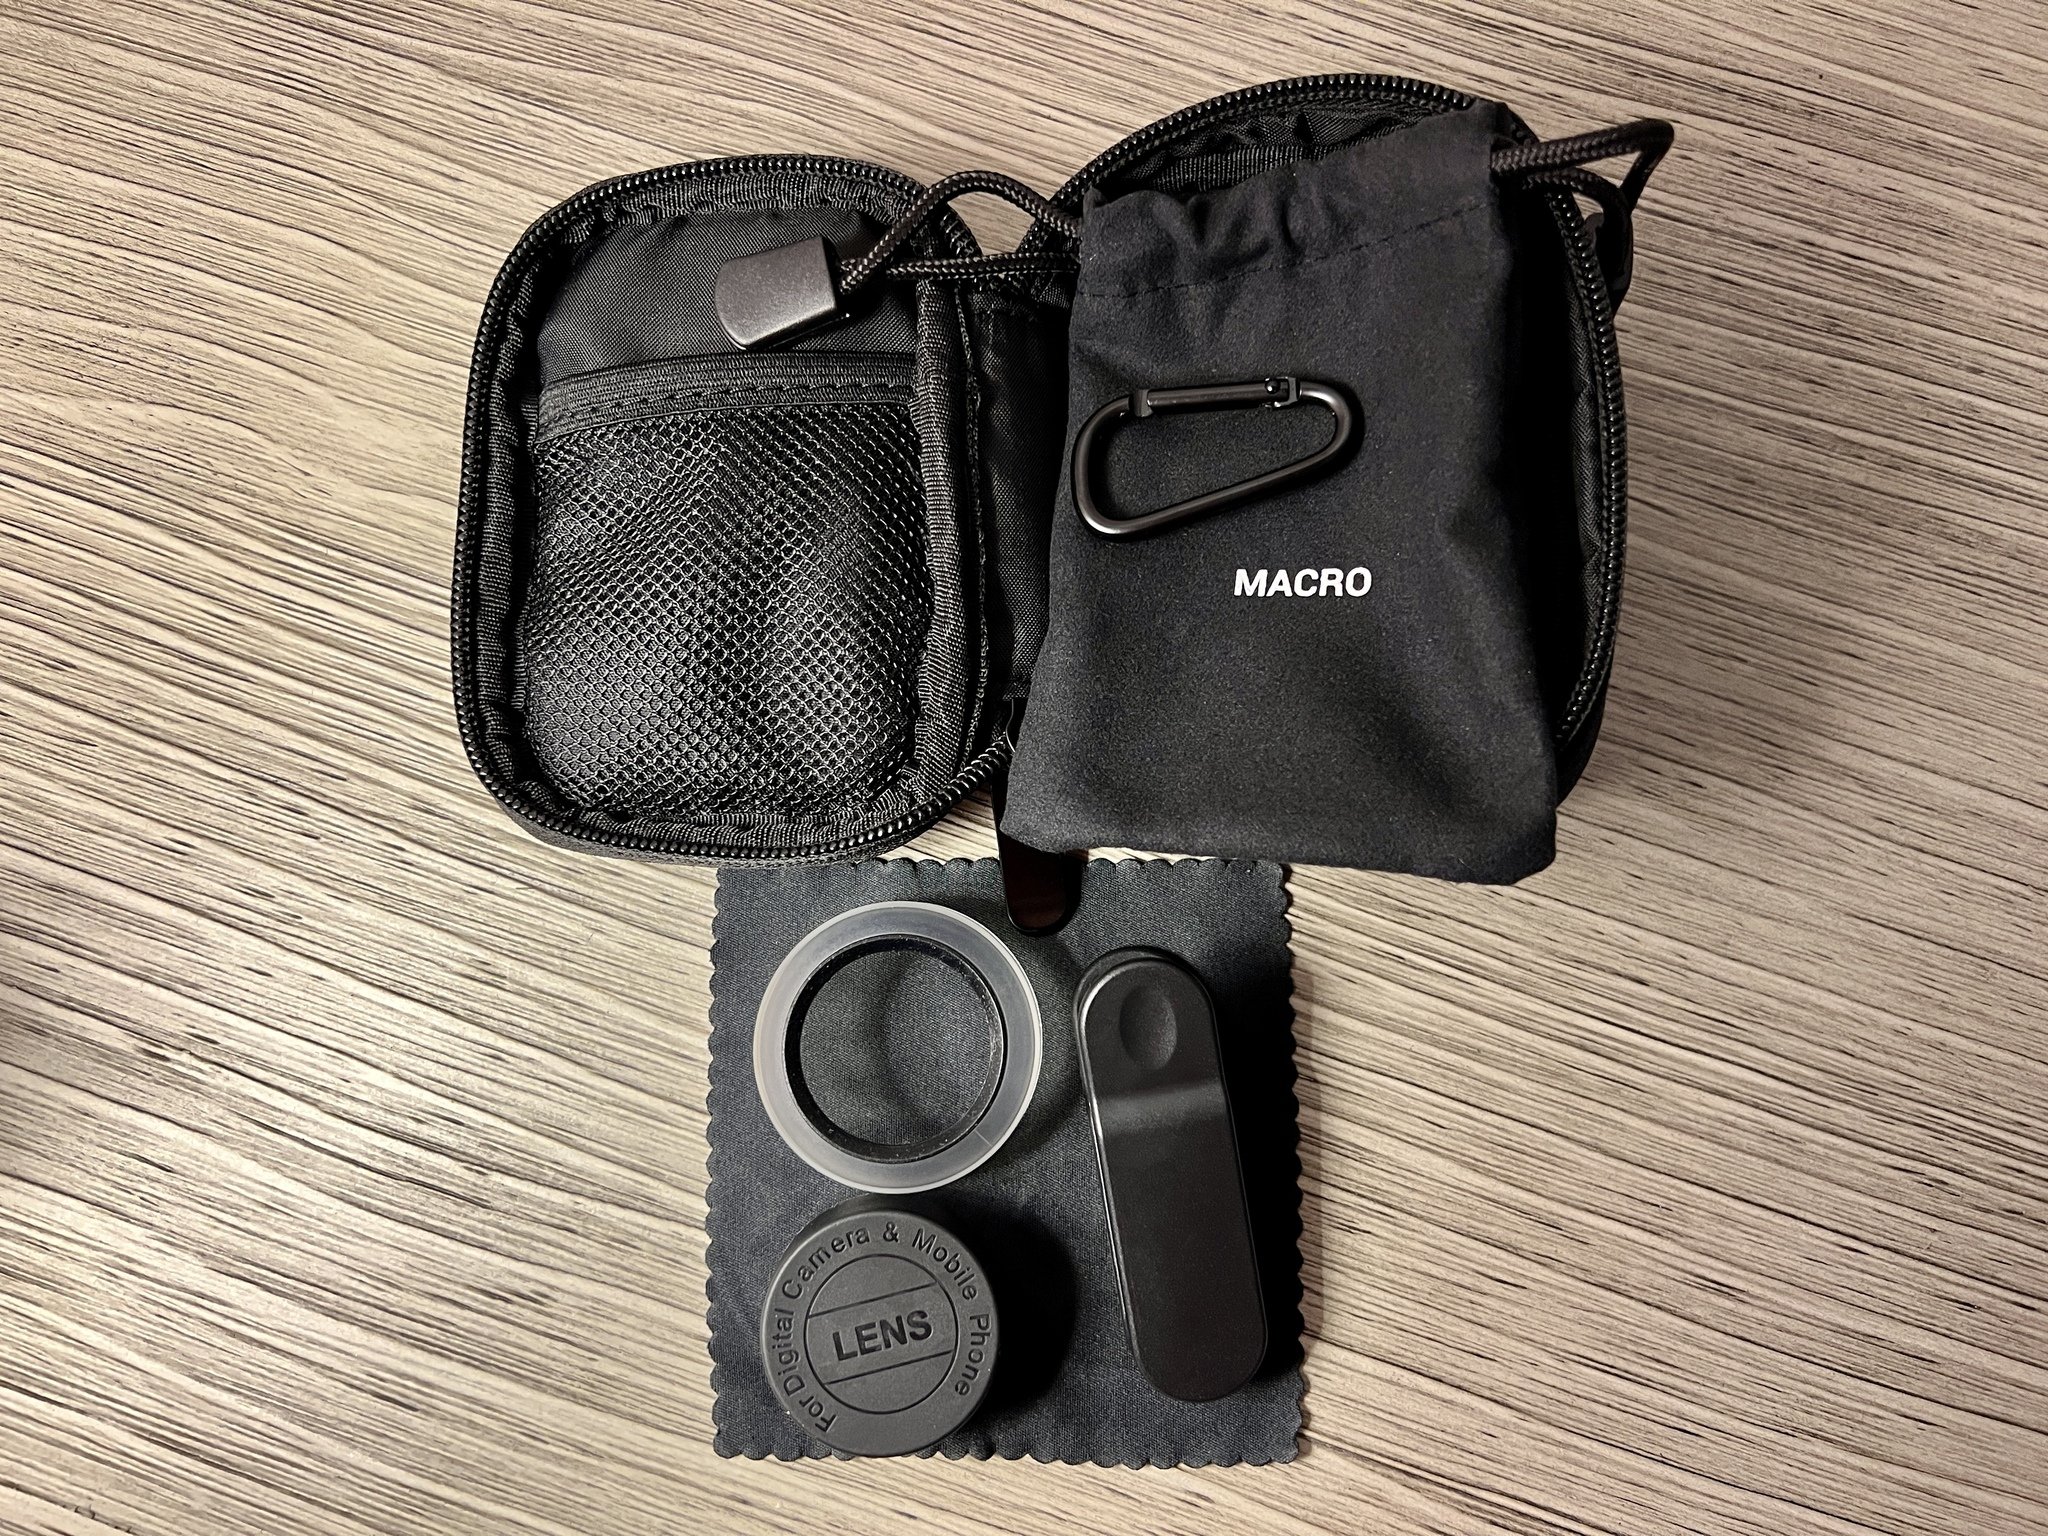 Sandmarc Macro Lens Complete Kit